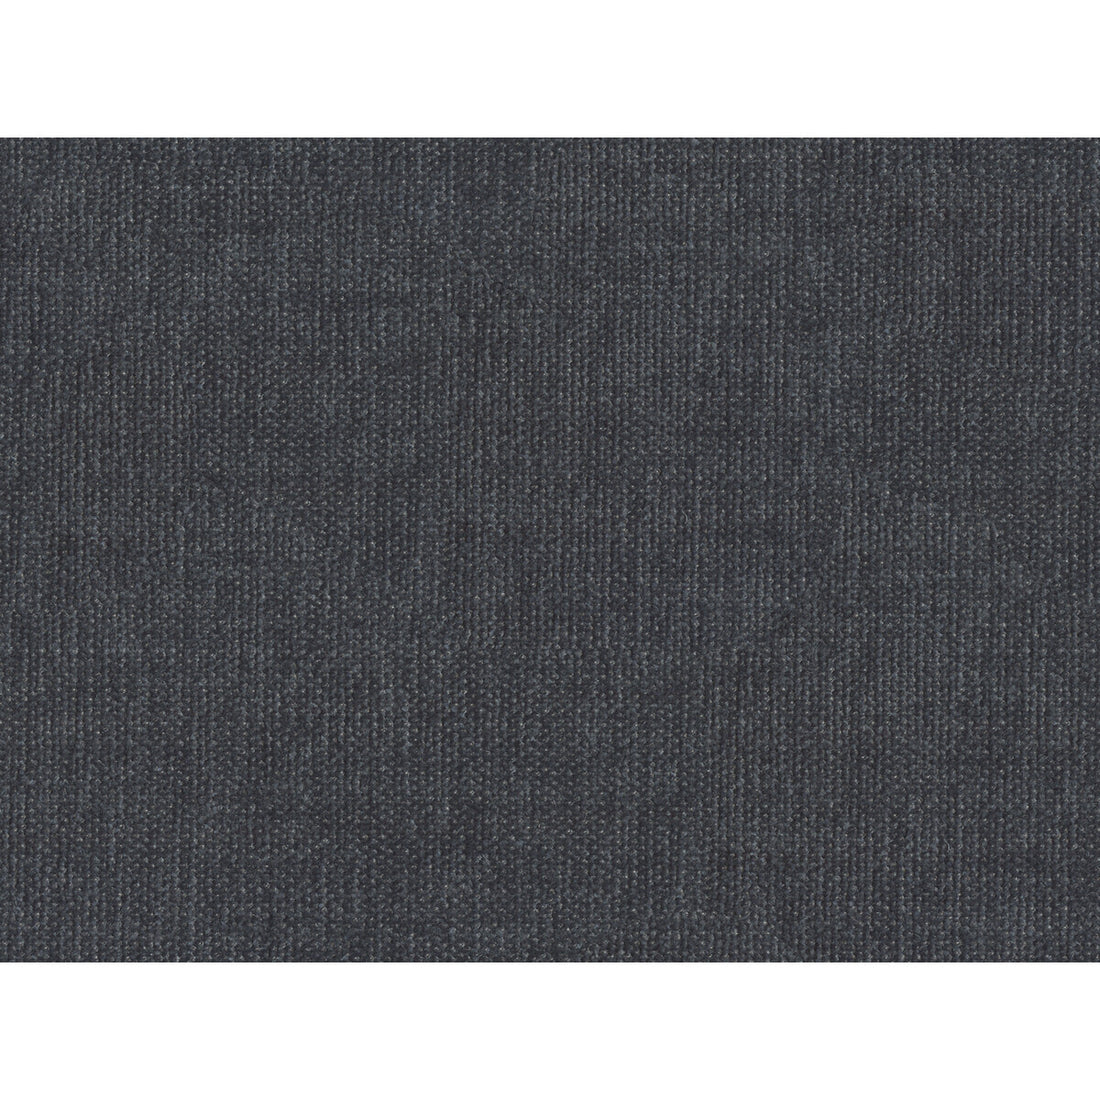 Kravet Smart fabric in 34959-85 color - pattern 34959.85.0 - by Kravet Smart in the Performance Kravetarmor collection